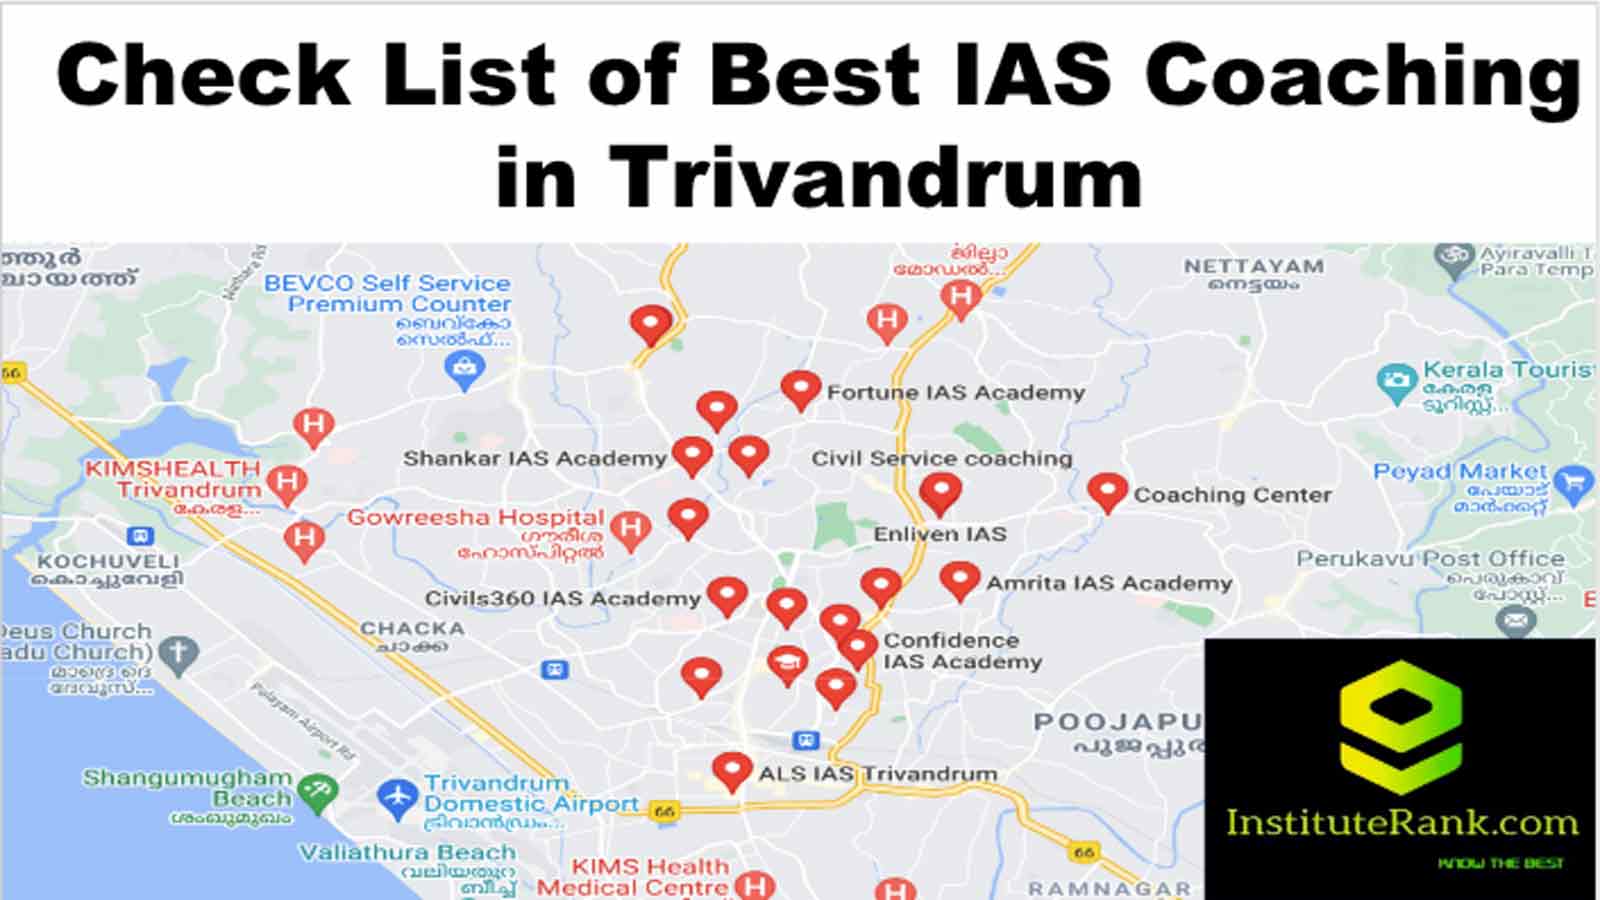 List of best IAS Coaching in Trivandrum